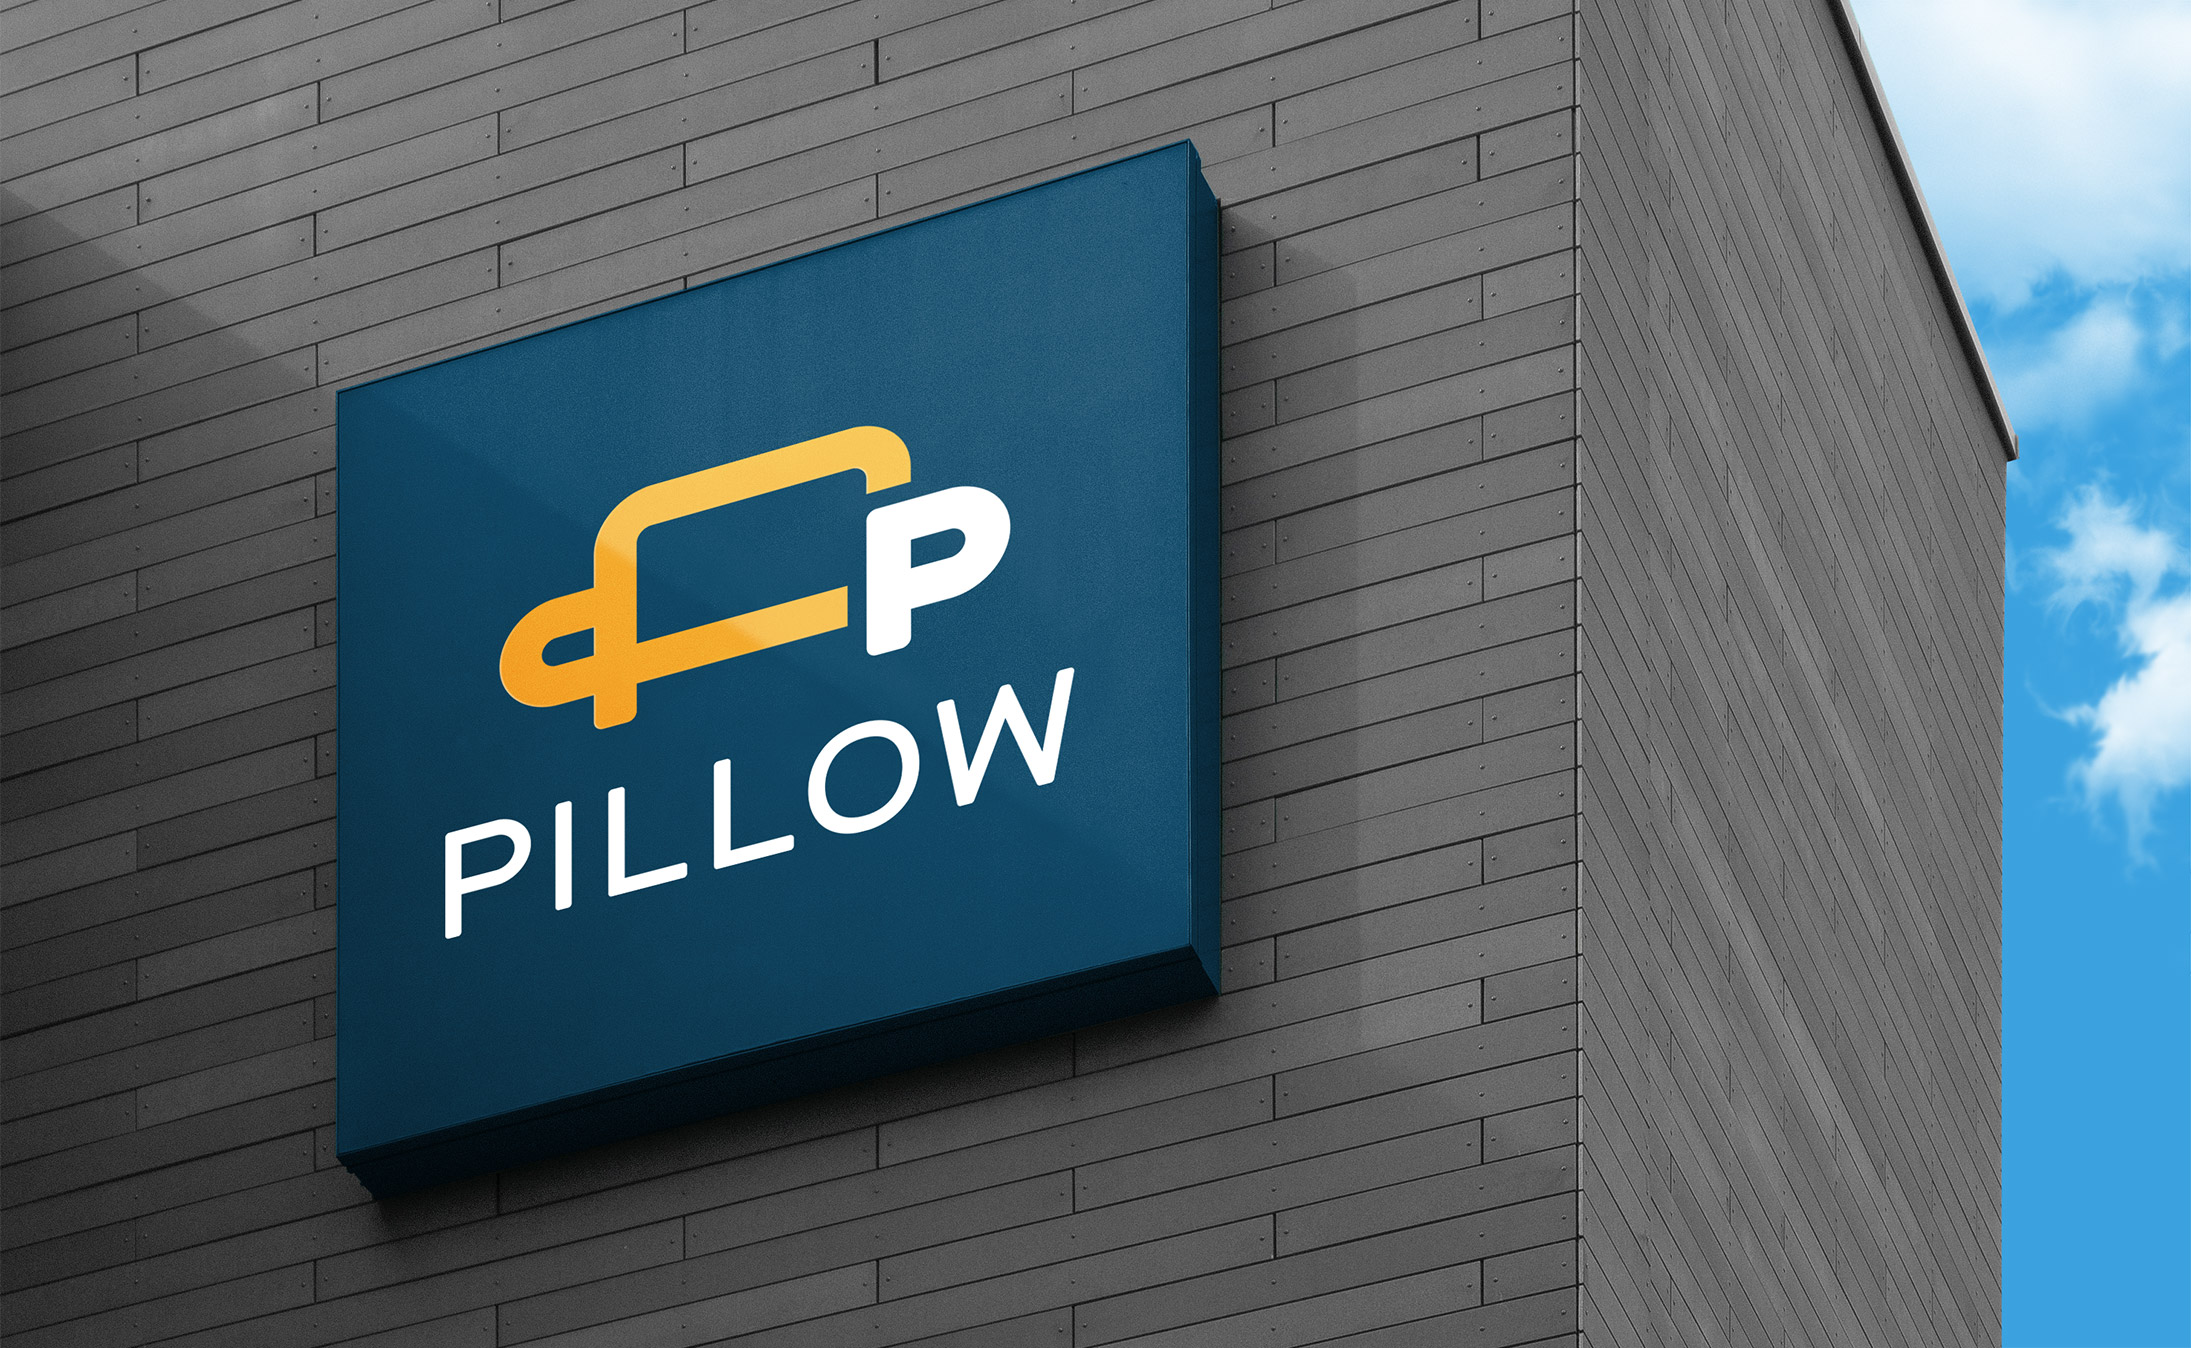 pillow, logo, design, topuria, tbilisi, georgia, lოგოს, დიზაინი, თოფურია, ფილოუ